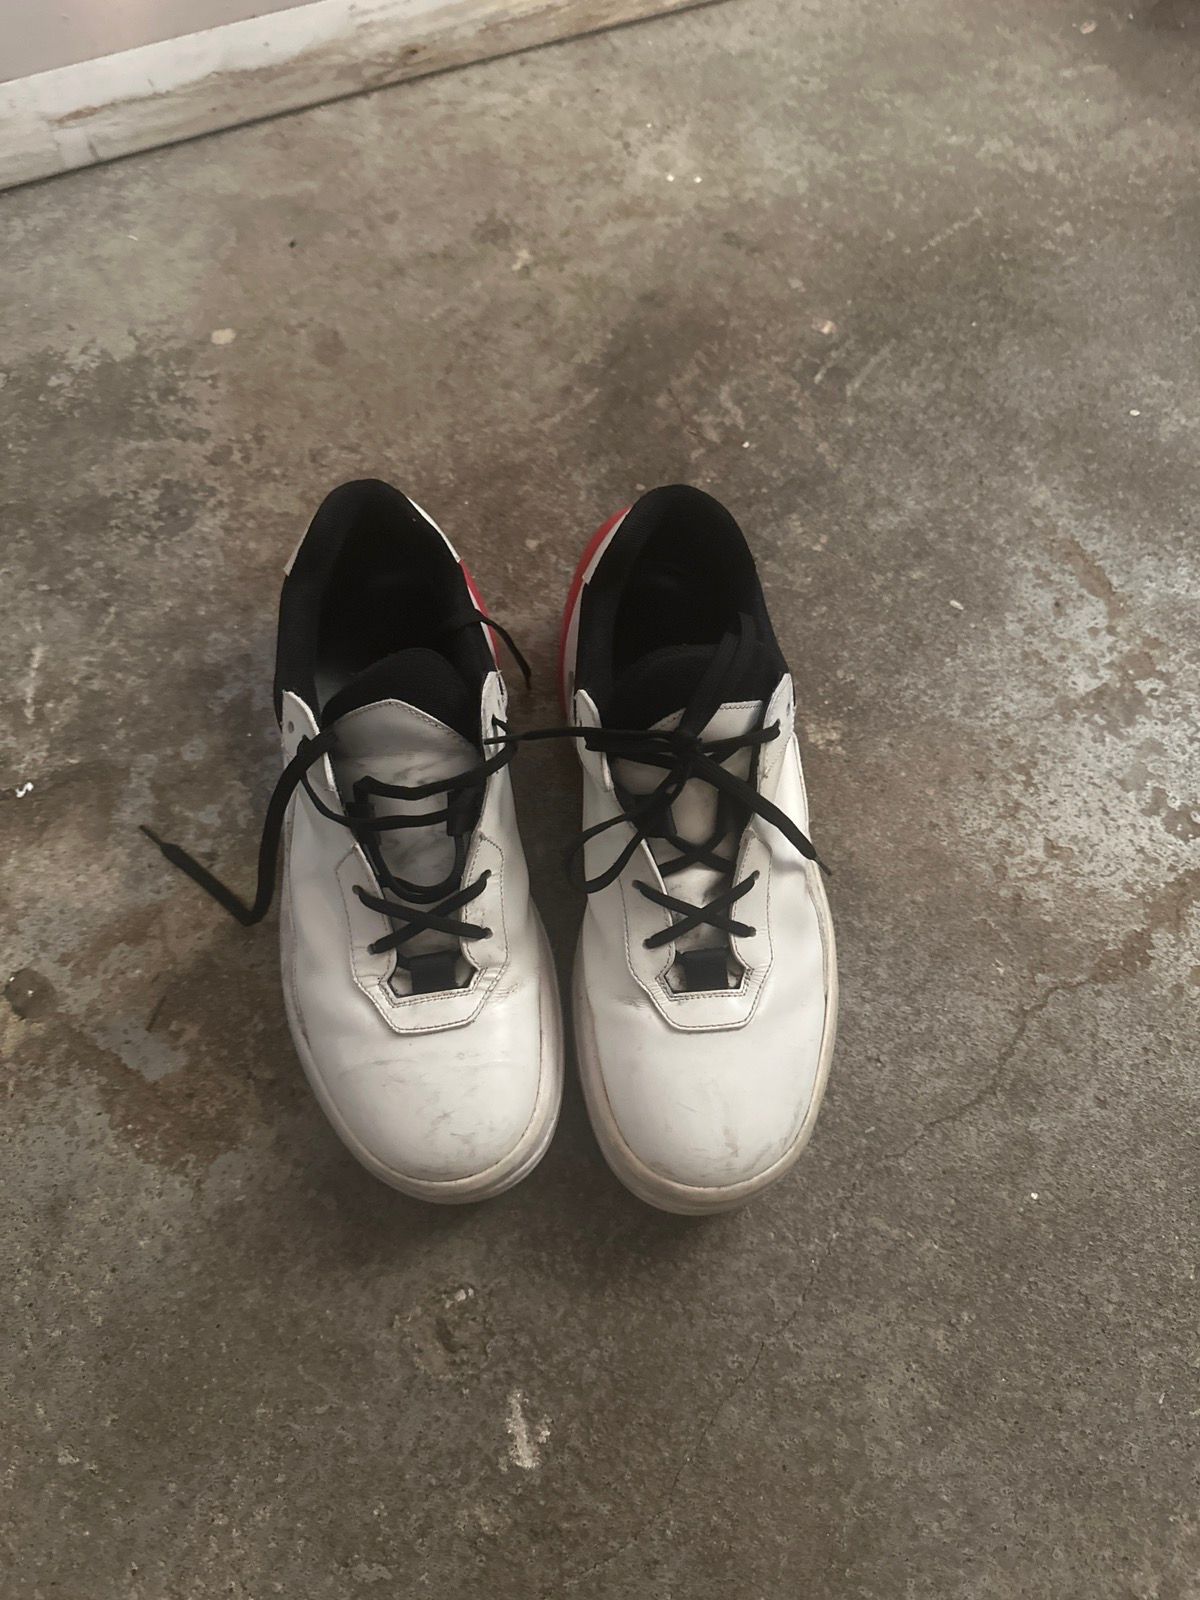 1017 ALYX 9SM ALYX studios sneaker boot | Grailed